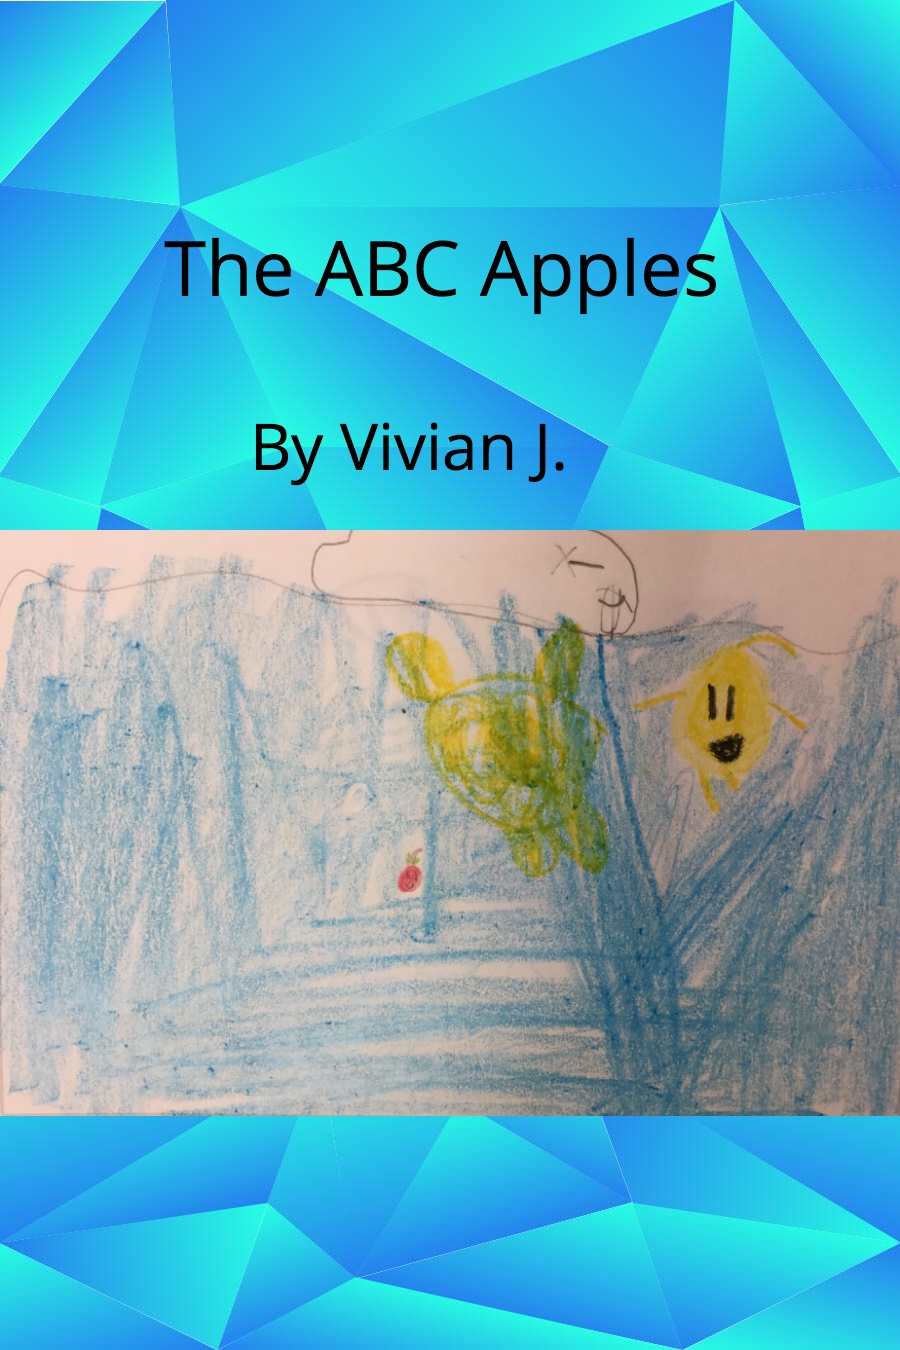 The ABC Apples by Vivian J